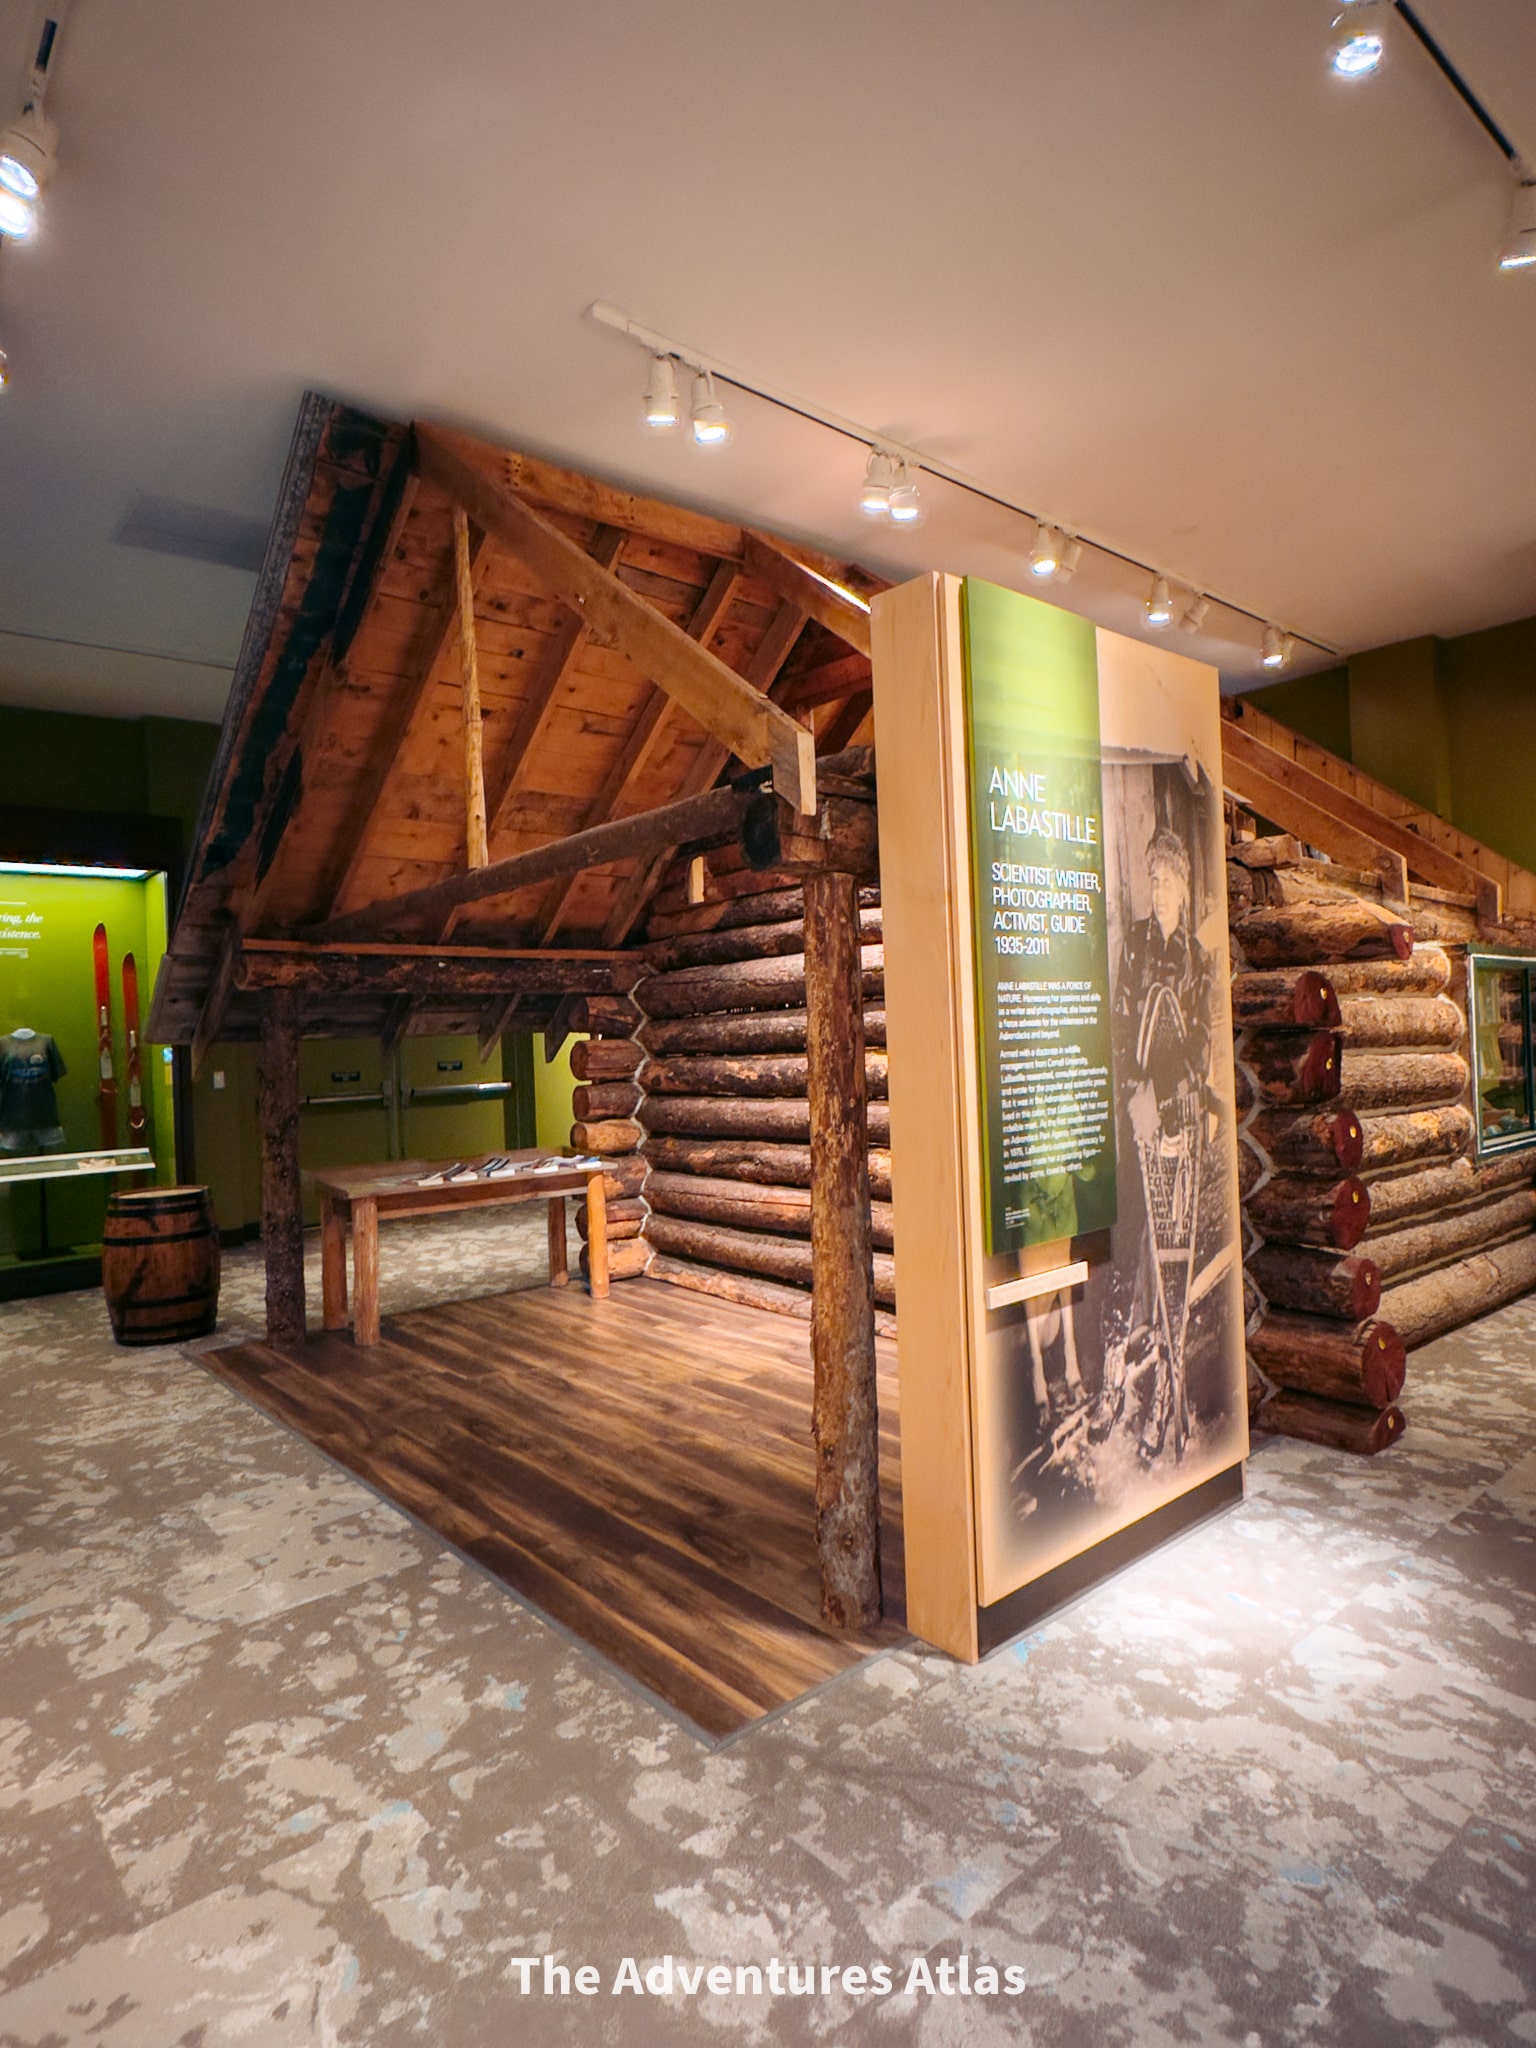 Anna LaBastille exhibit at the Adirondack Experience Museum on Blue Mountain Lake NY